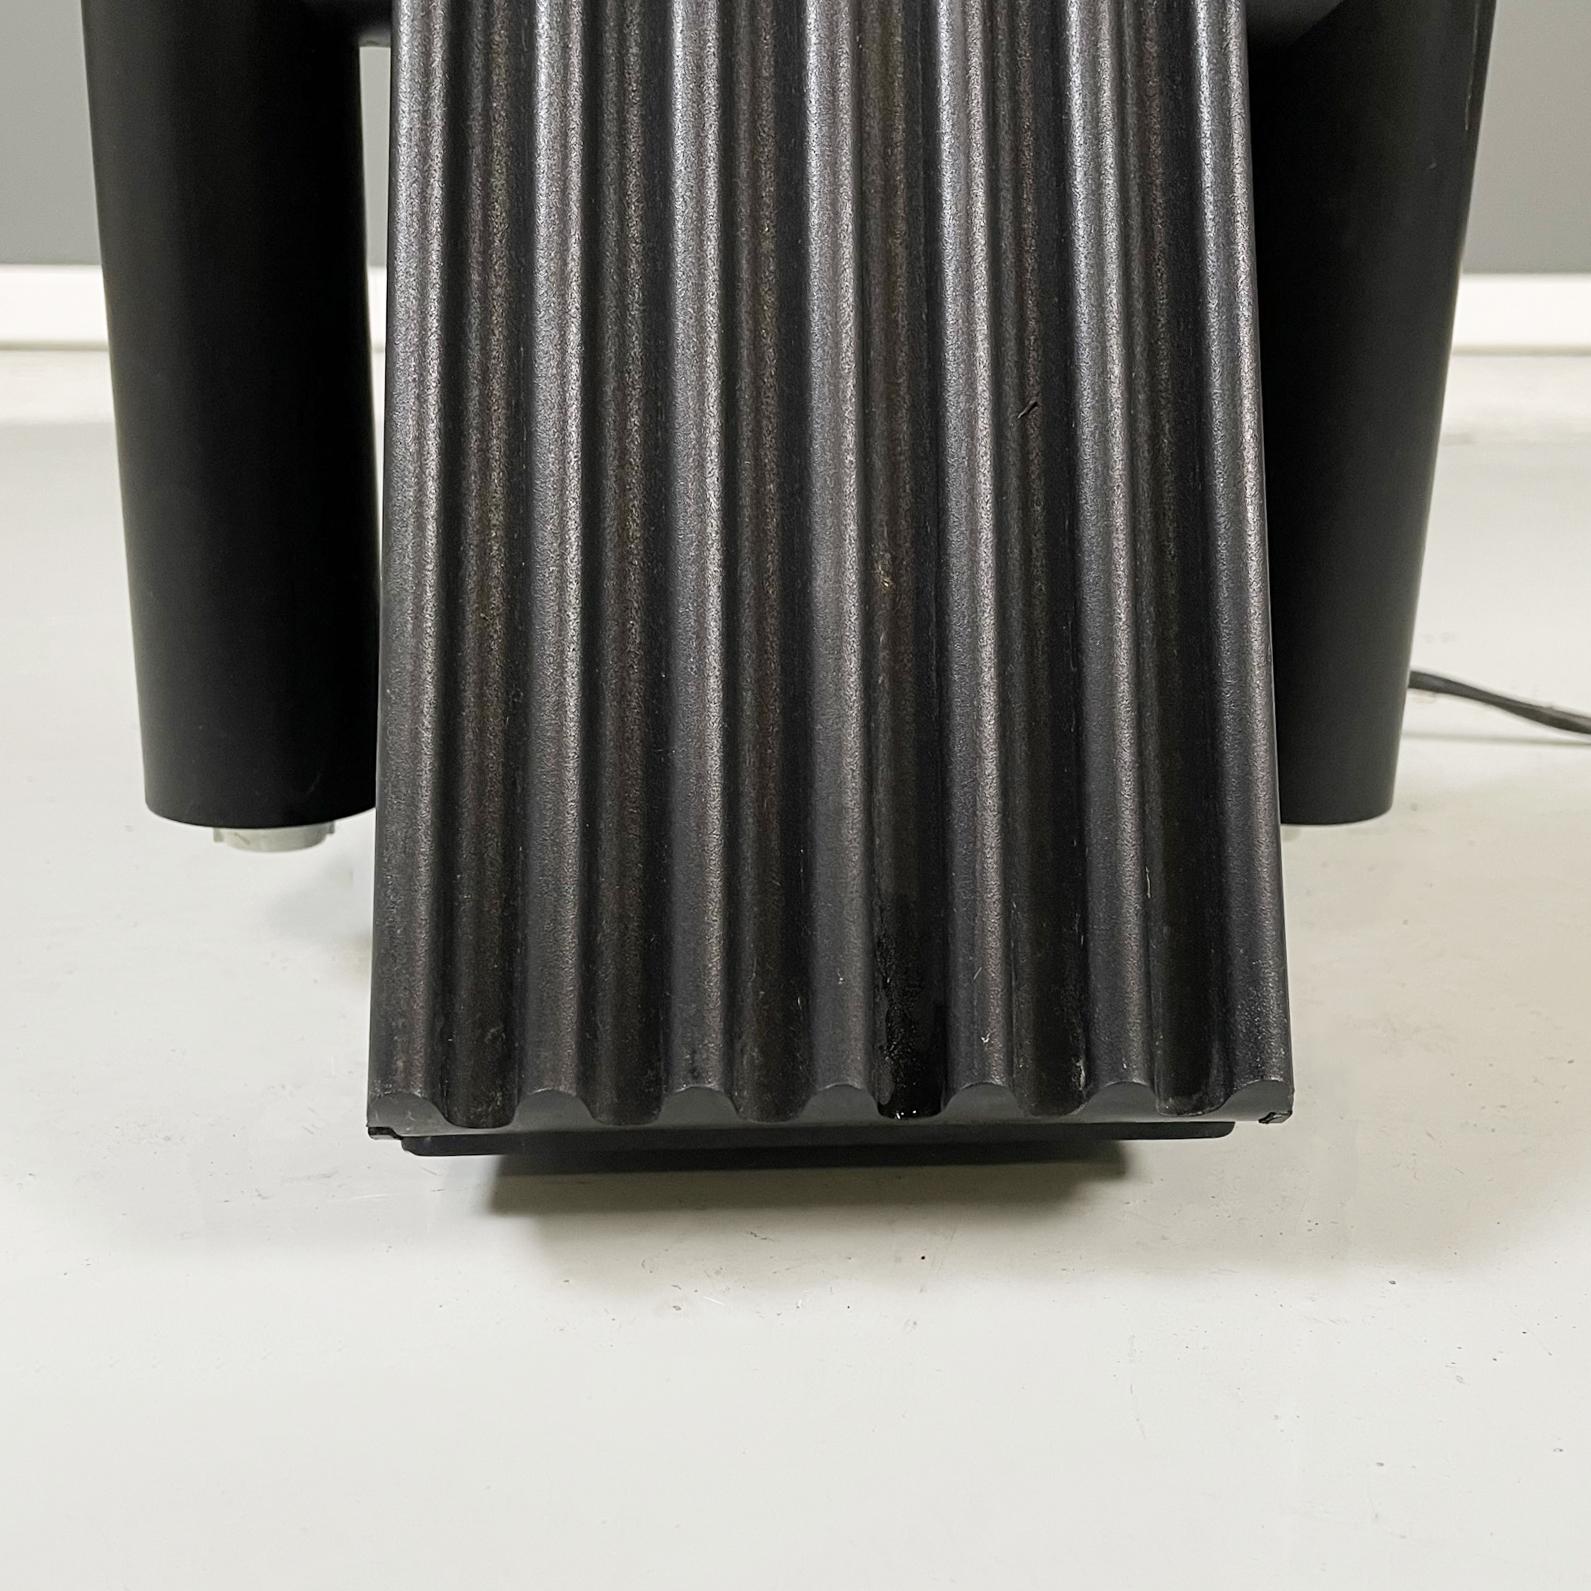 Italian Modern Adjustable Floor Lamp Sistema Flu by R. Bonetto for Luci, 1980s For Sale 9